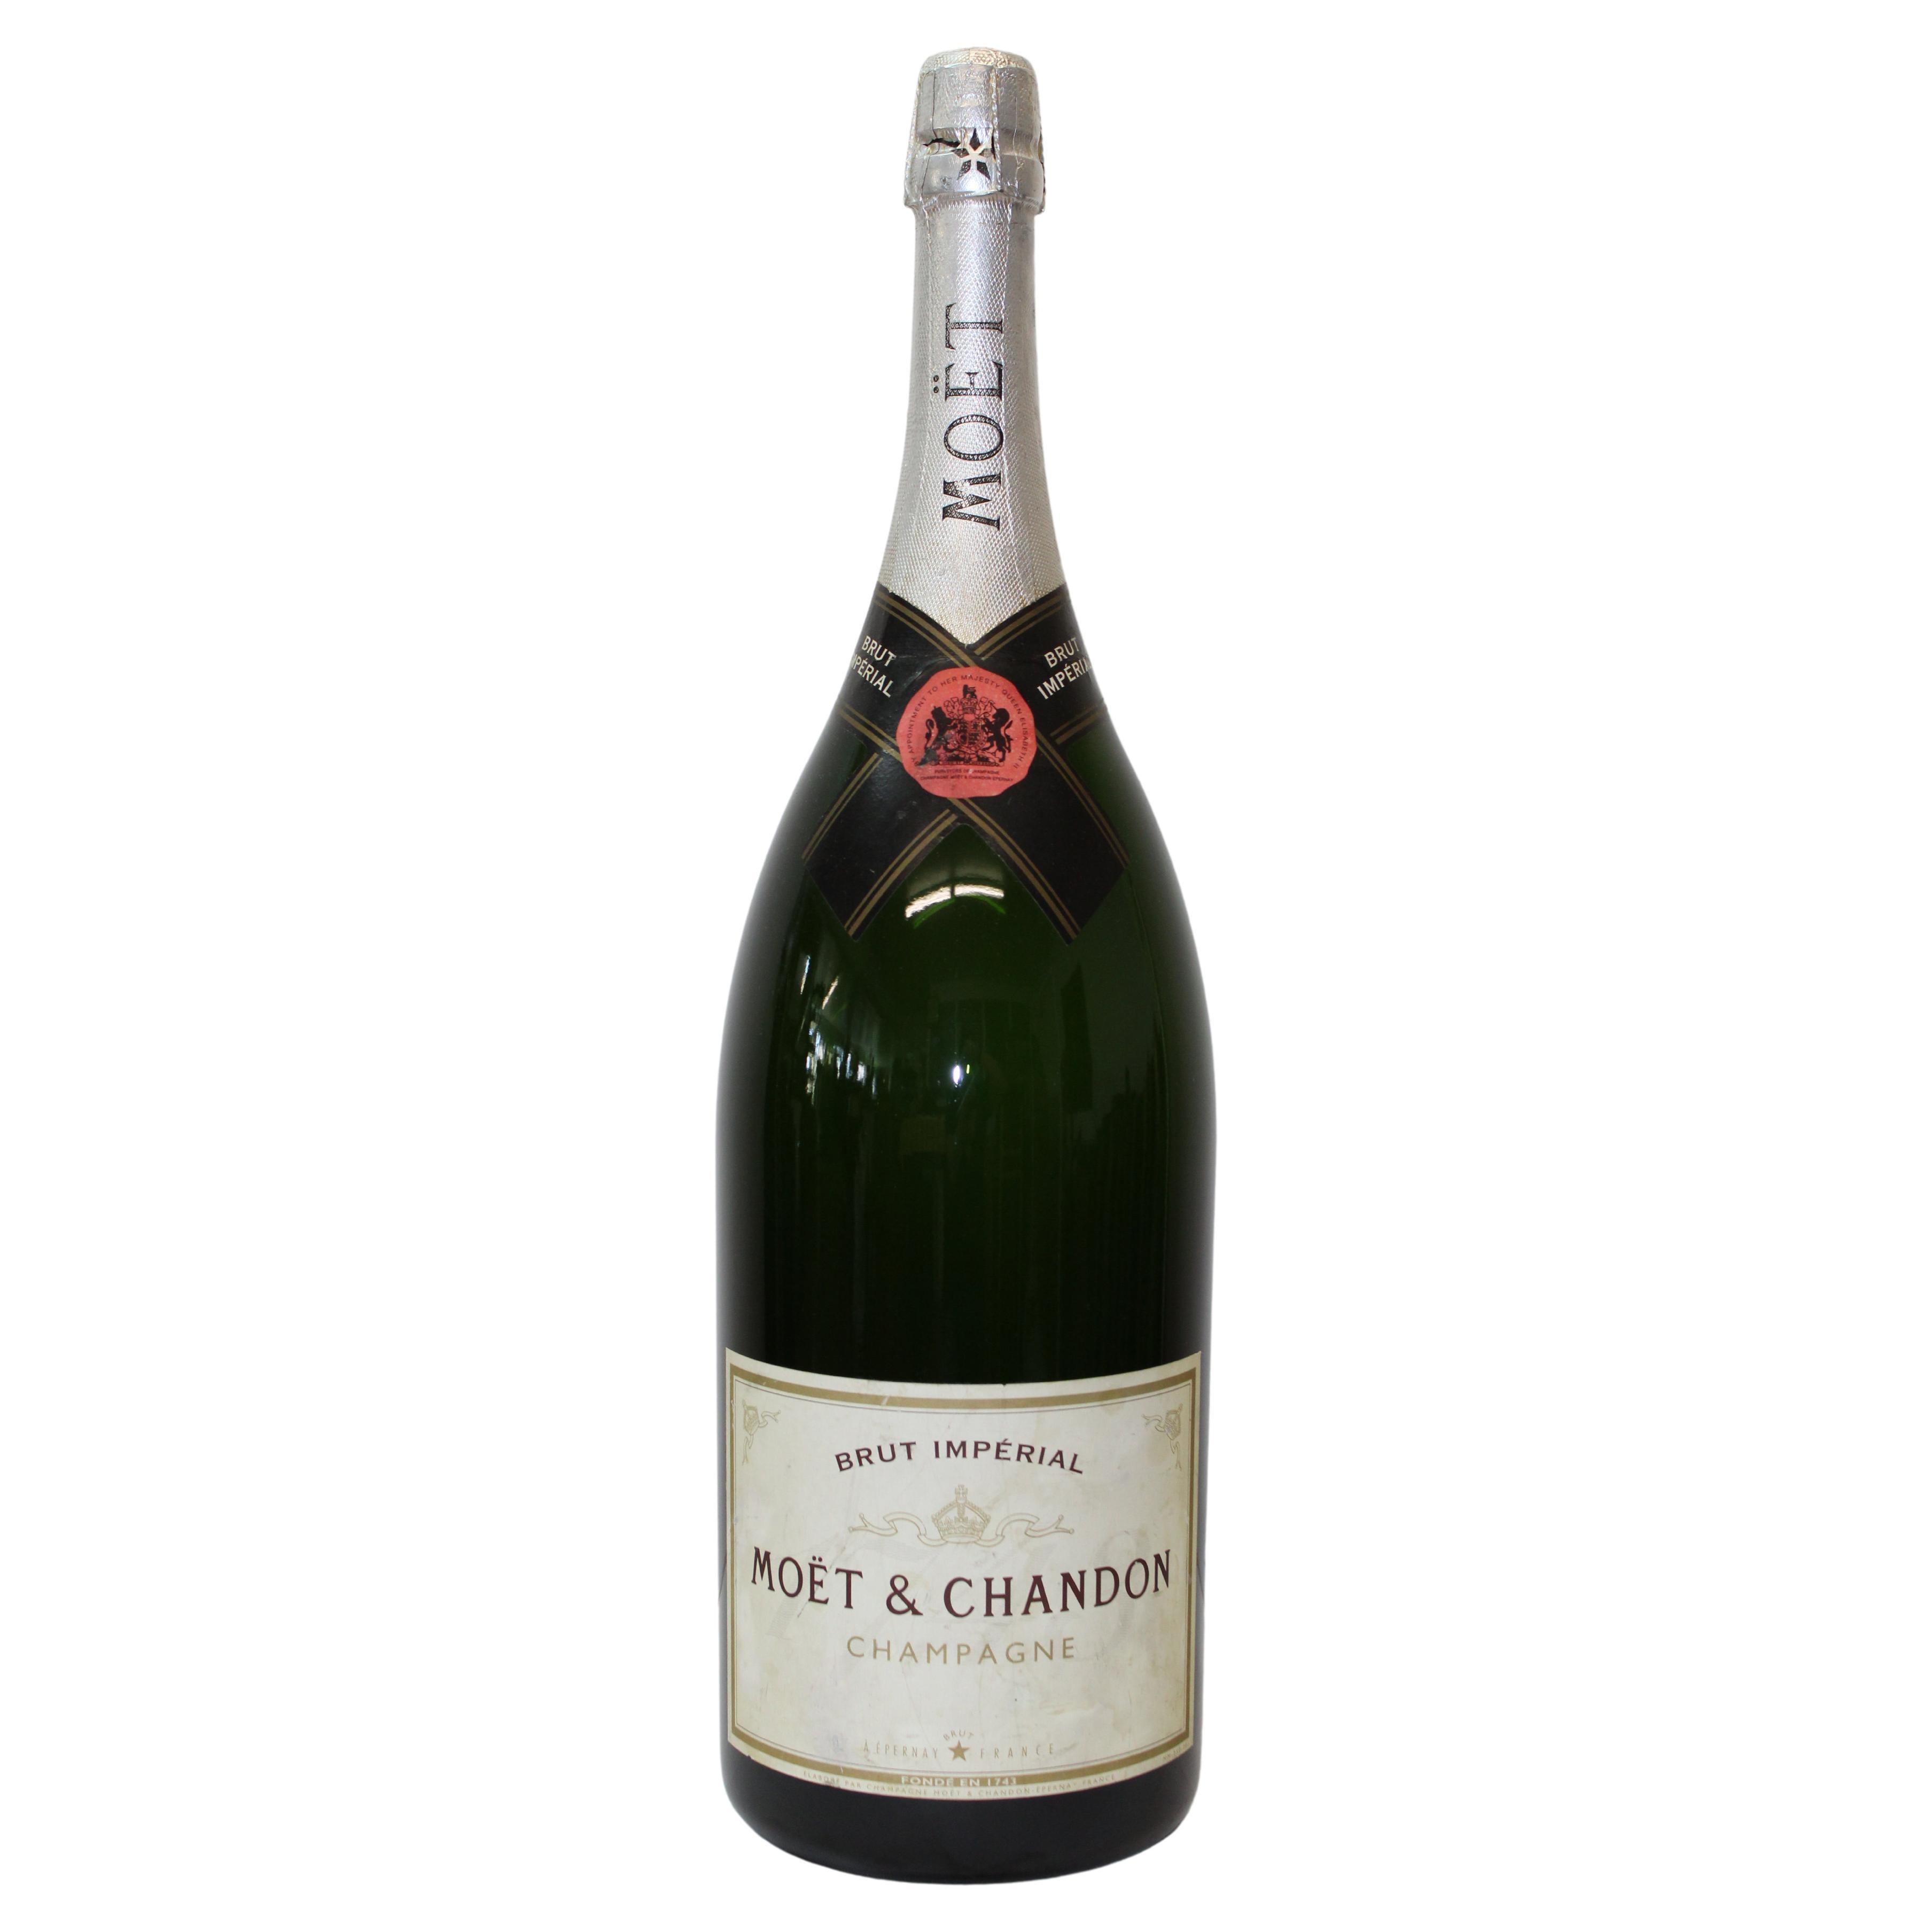 Moet & Chandon Display Champagne Bottle For Sale